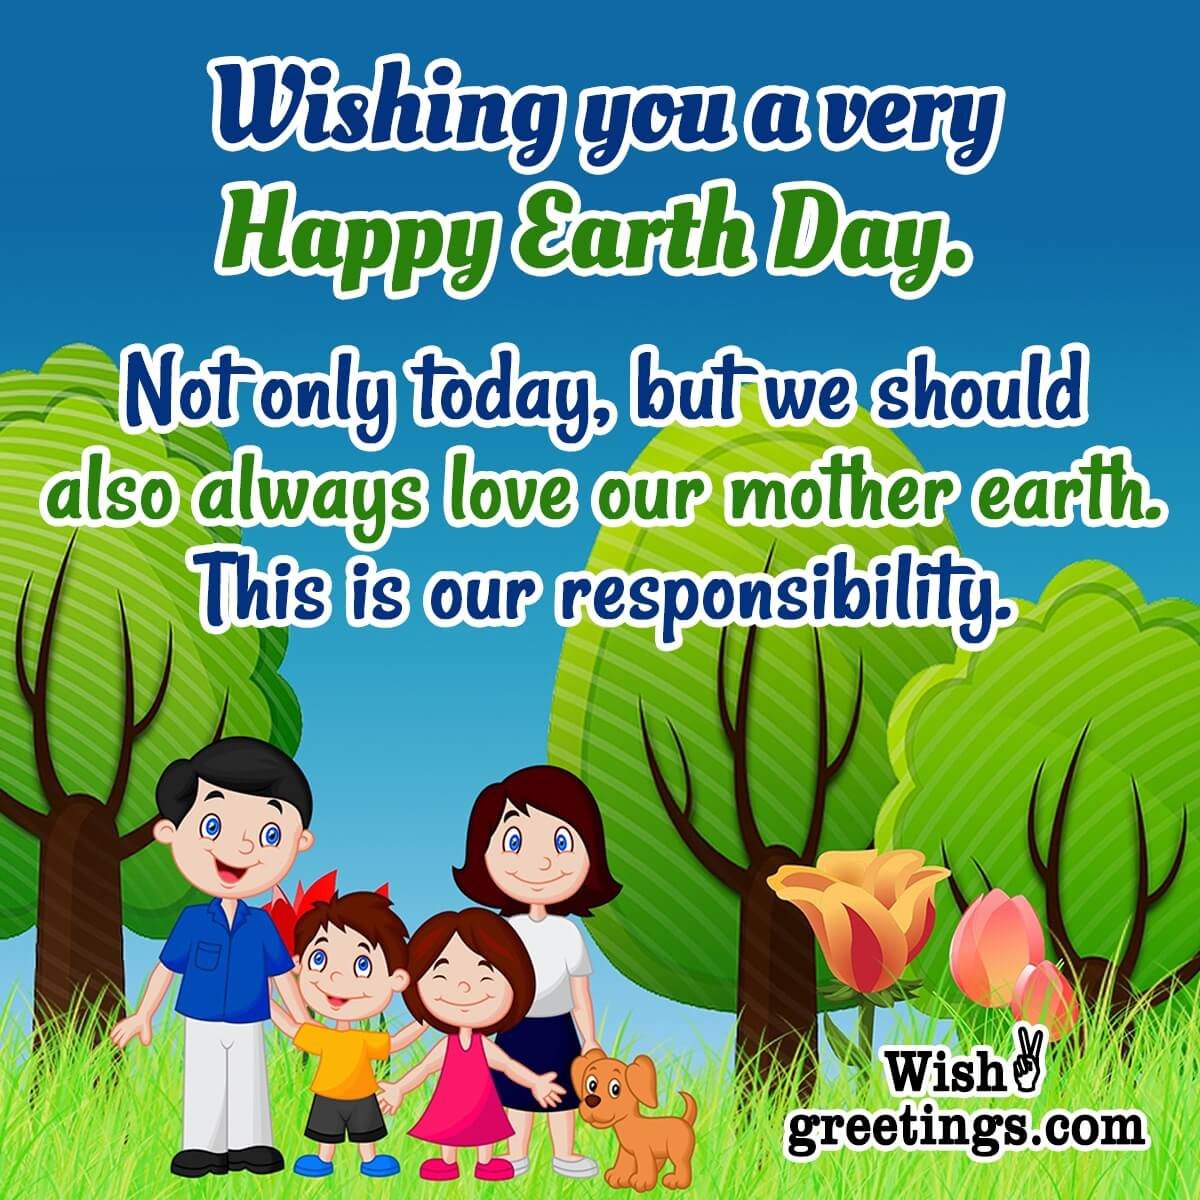 Wishing A Very Happy Earth Day